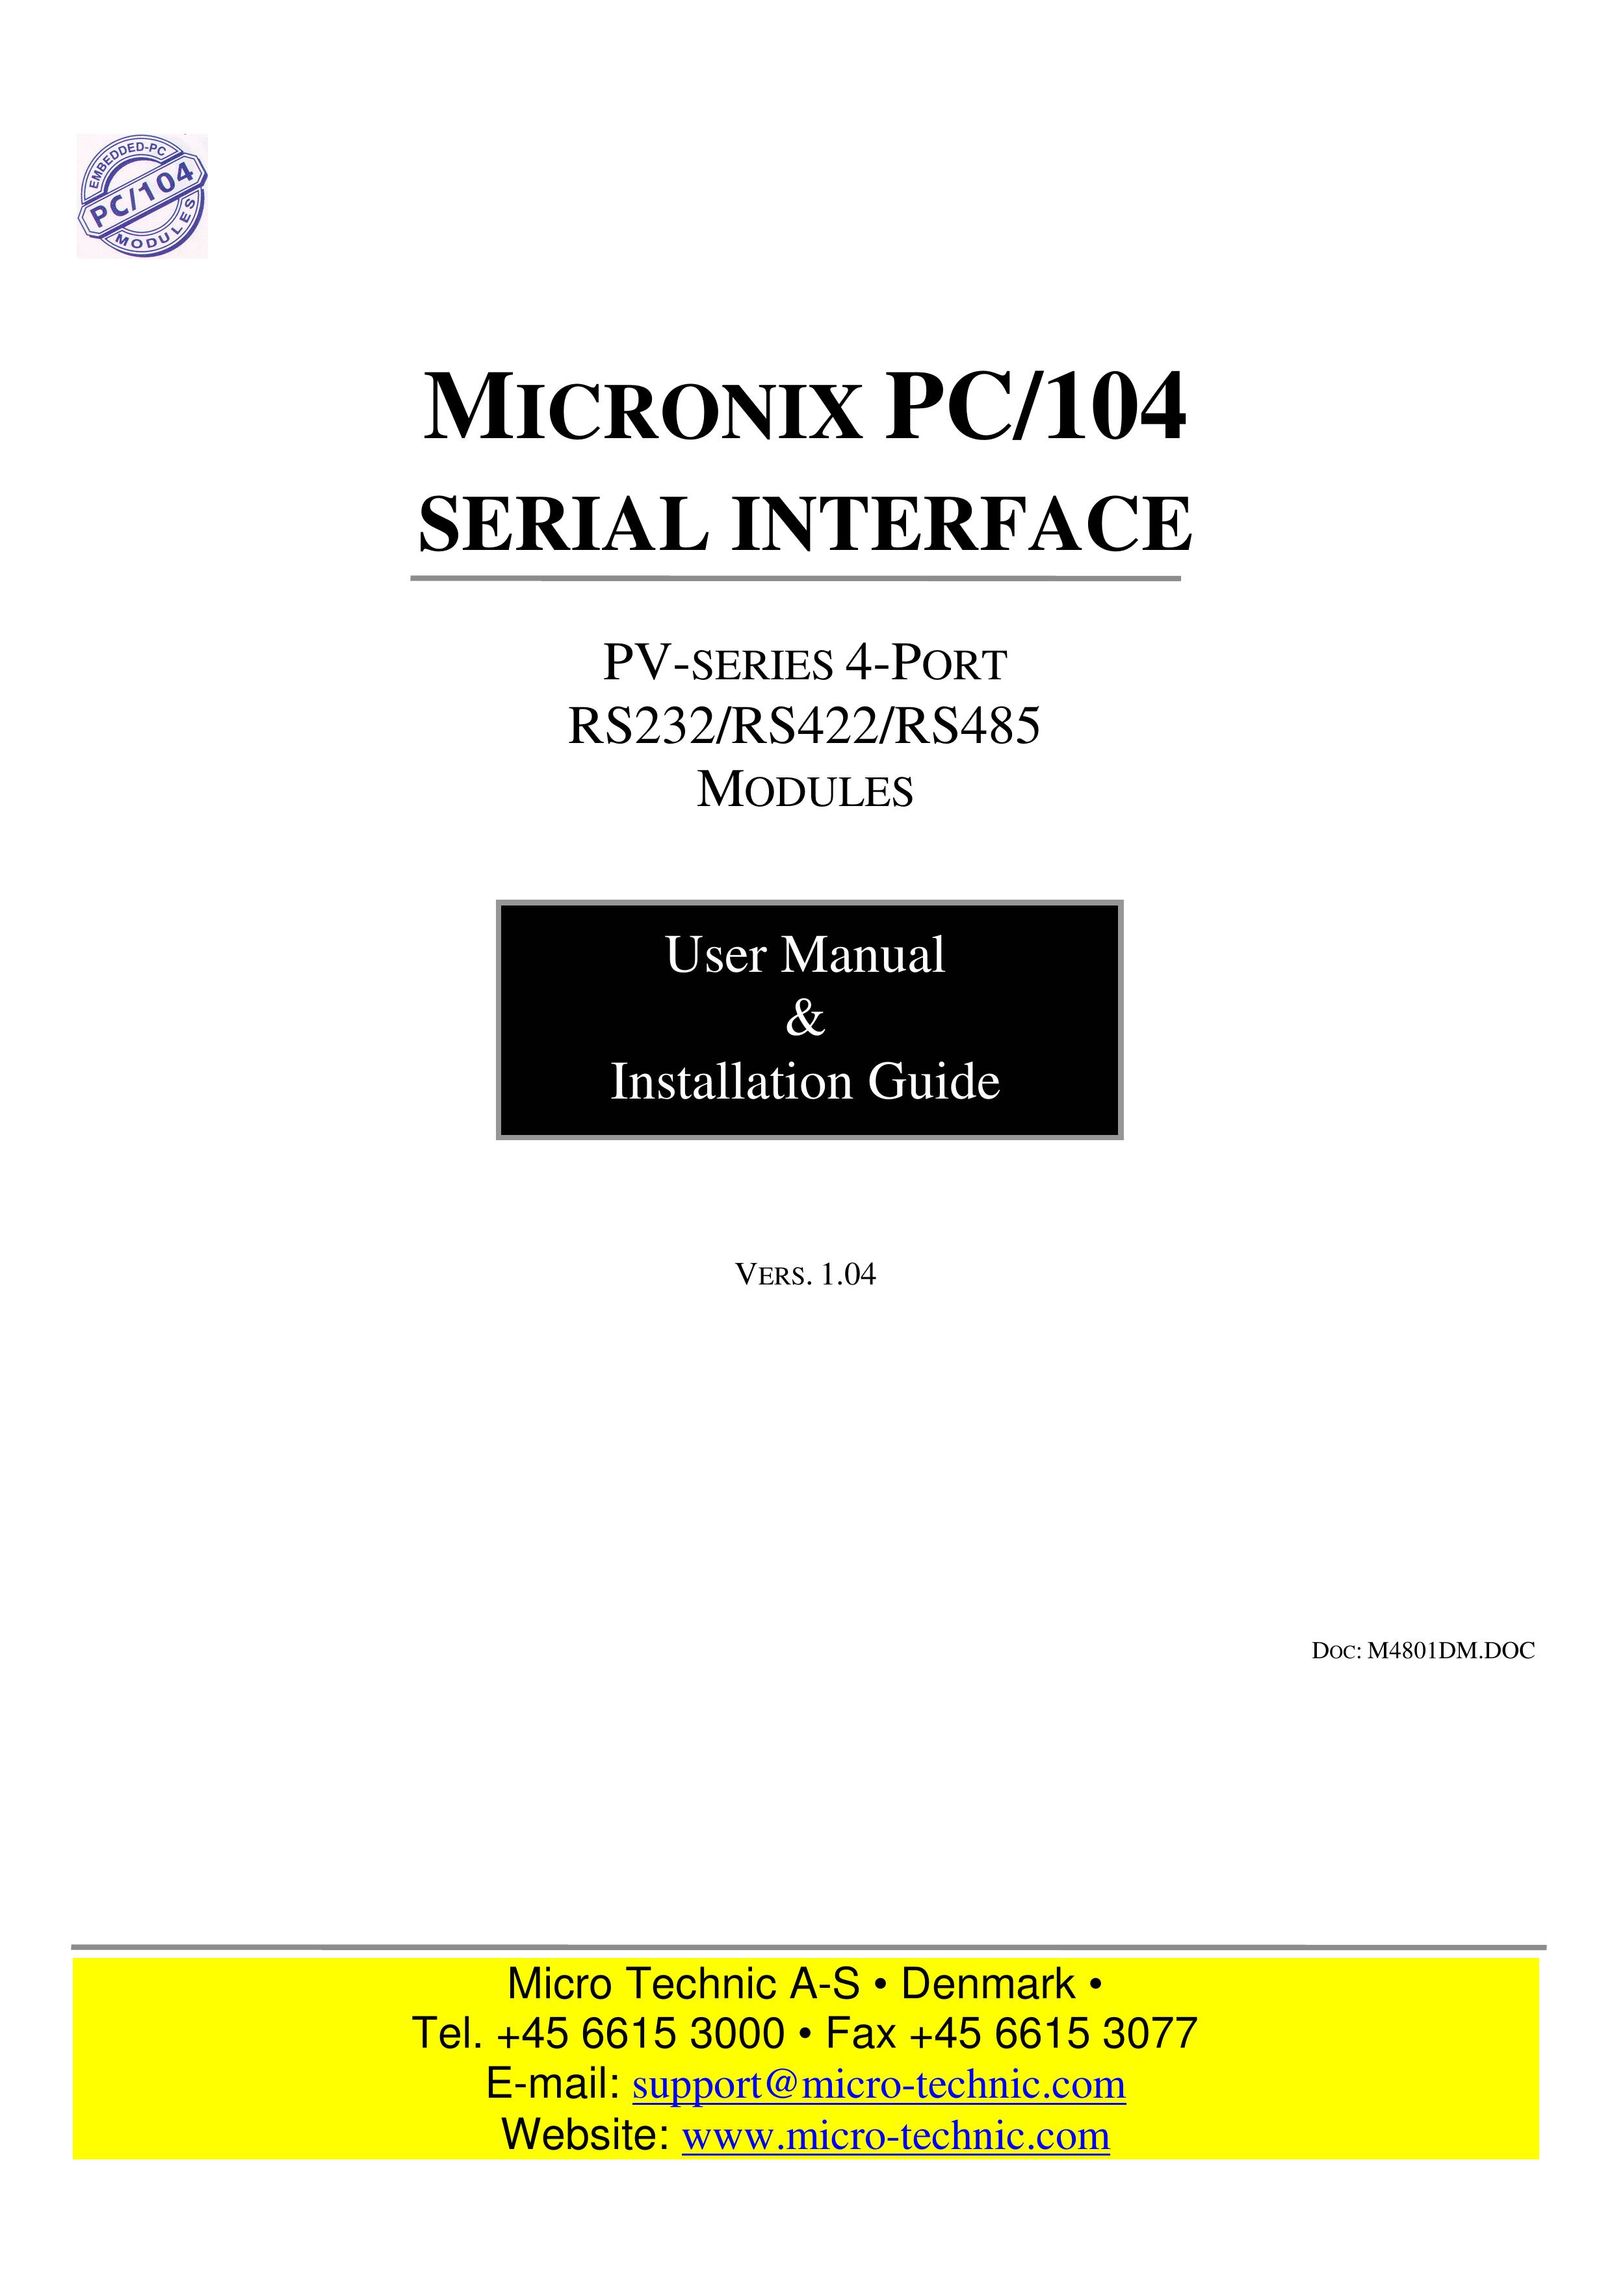 Micro Technic PV Series Network Card User Manual